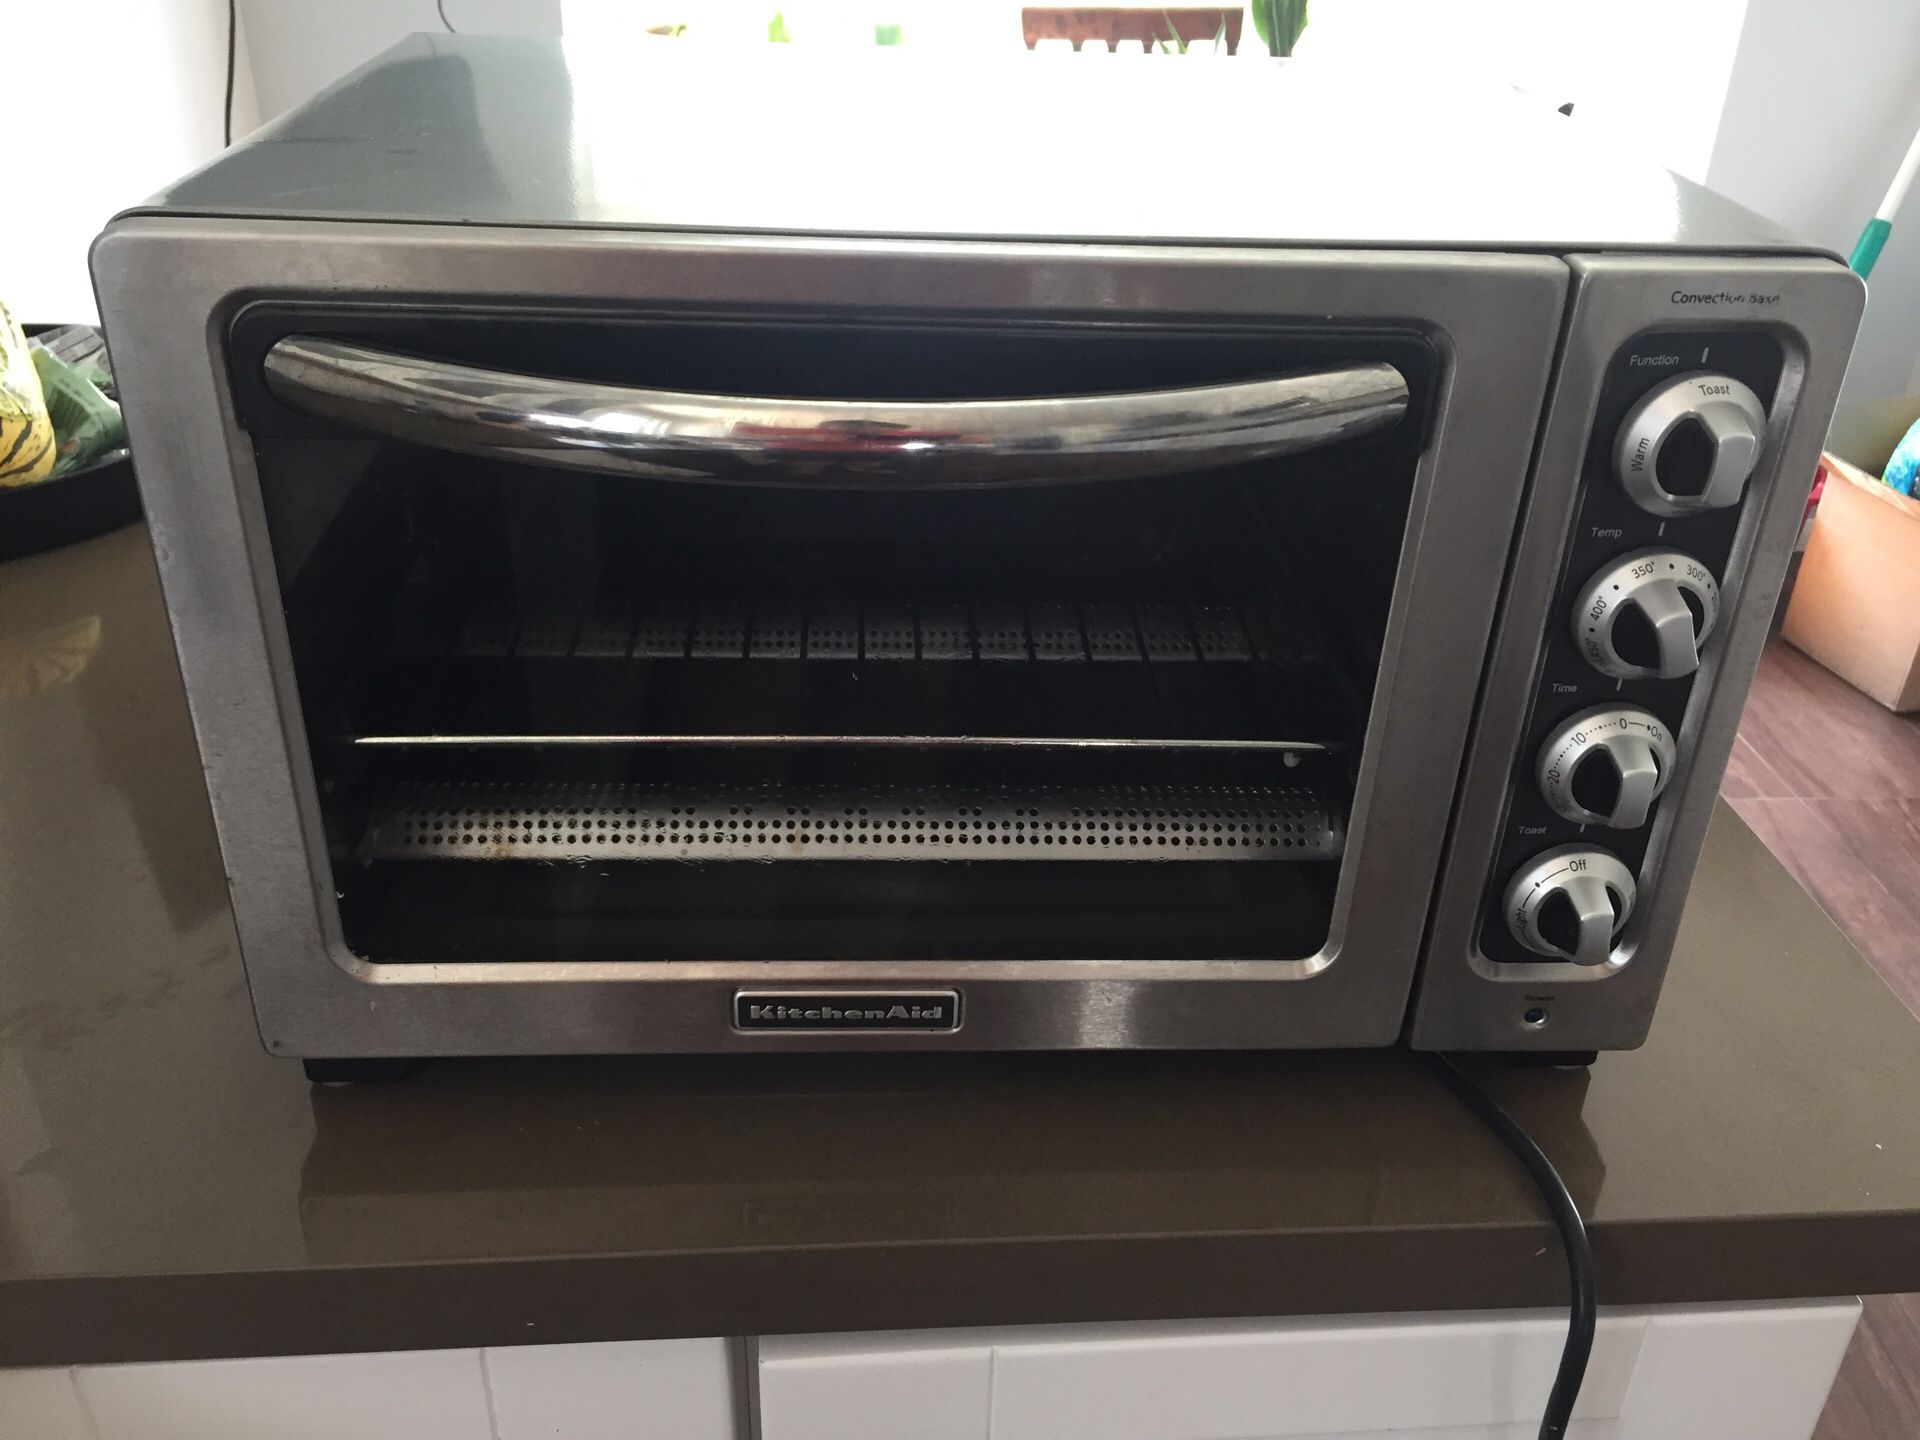 Kitchen aid toaster oven large